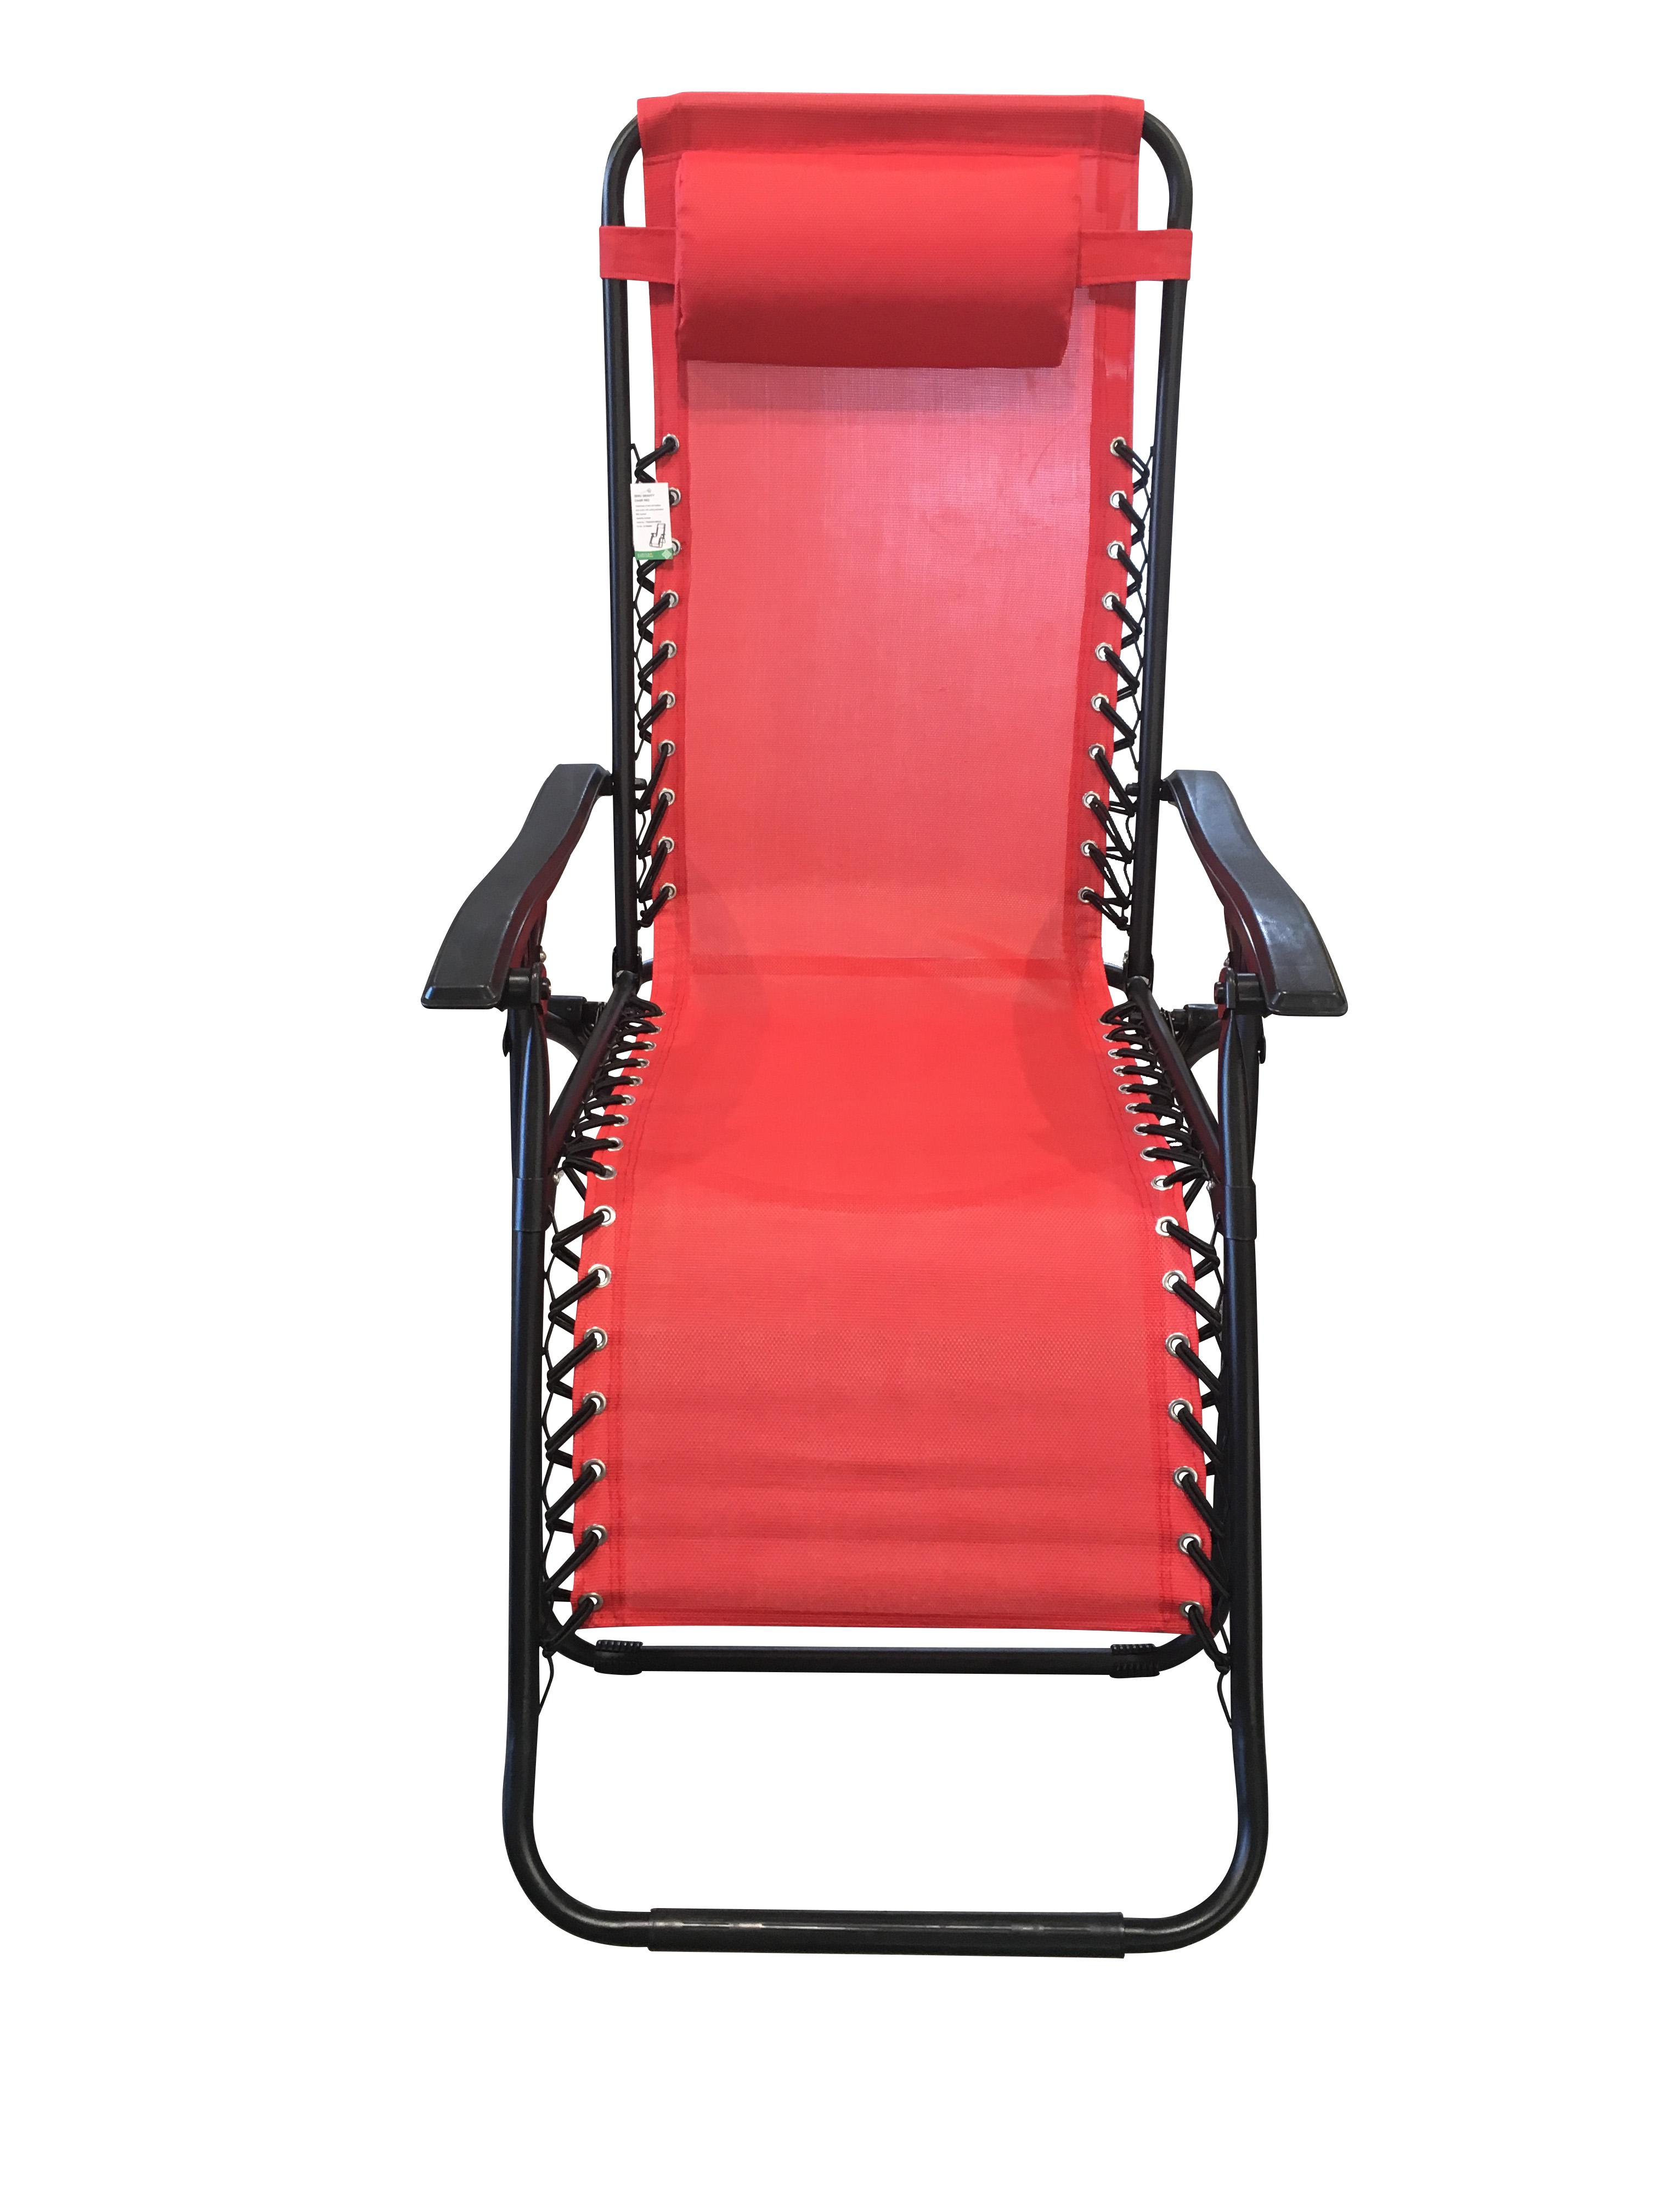 Zero Gravity Chair Red